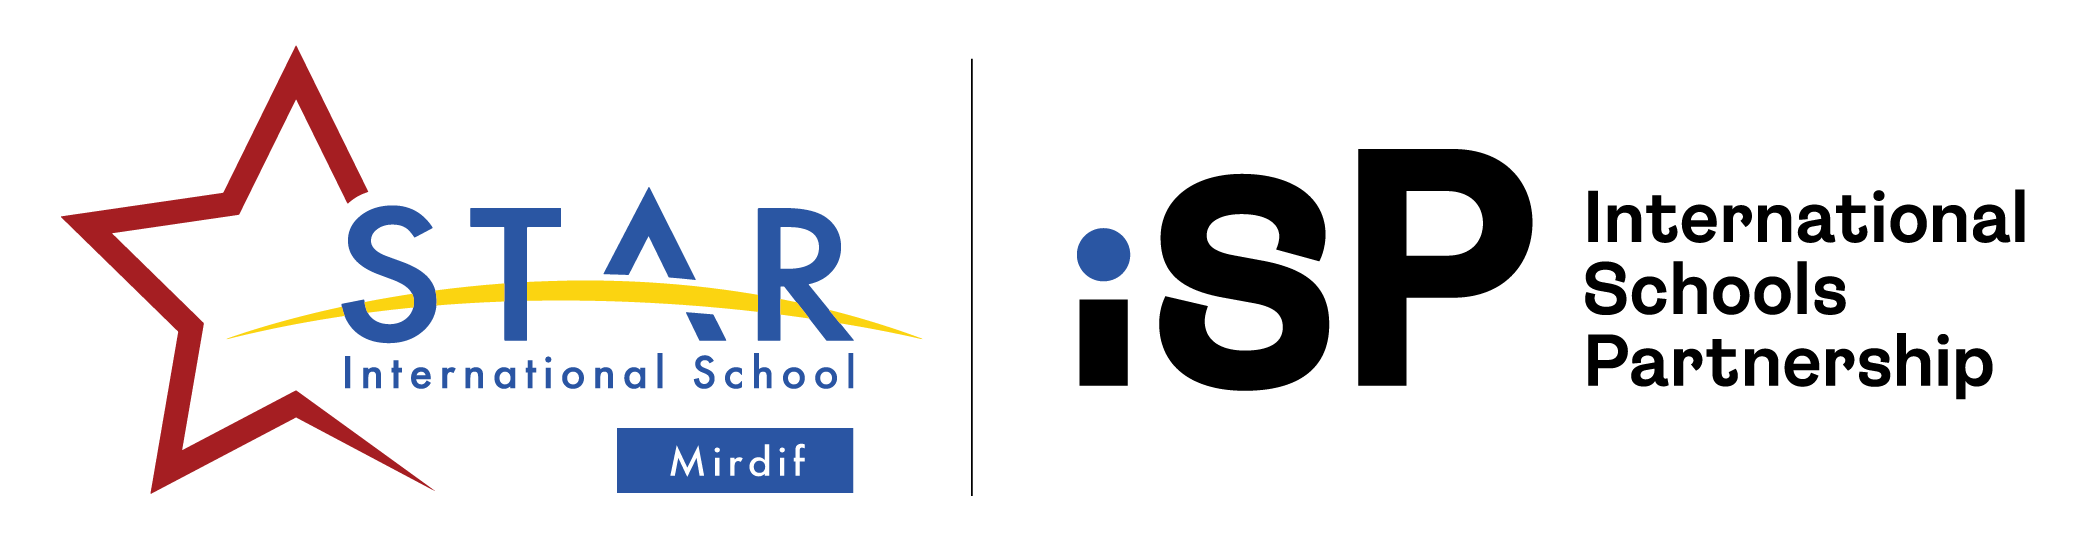 SISM-iSP Co-branding Logo_Color-1